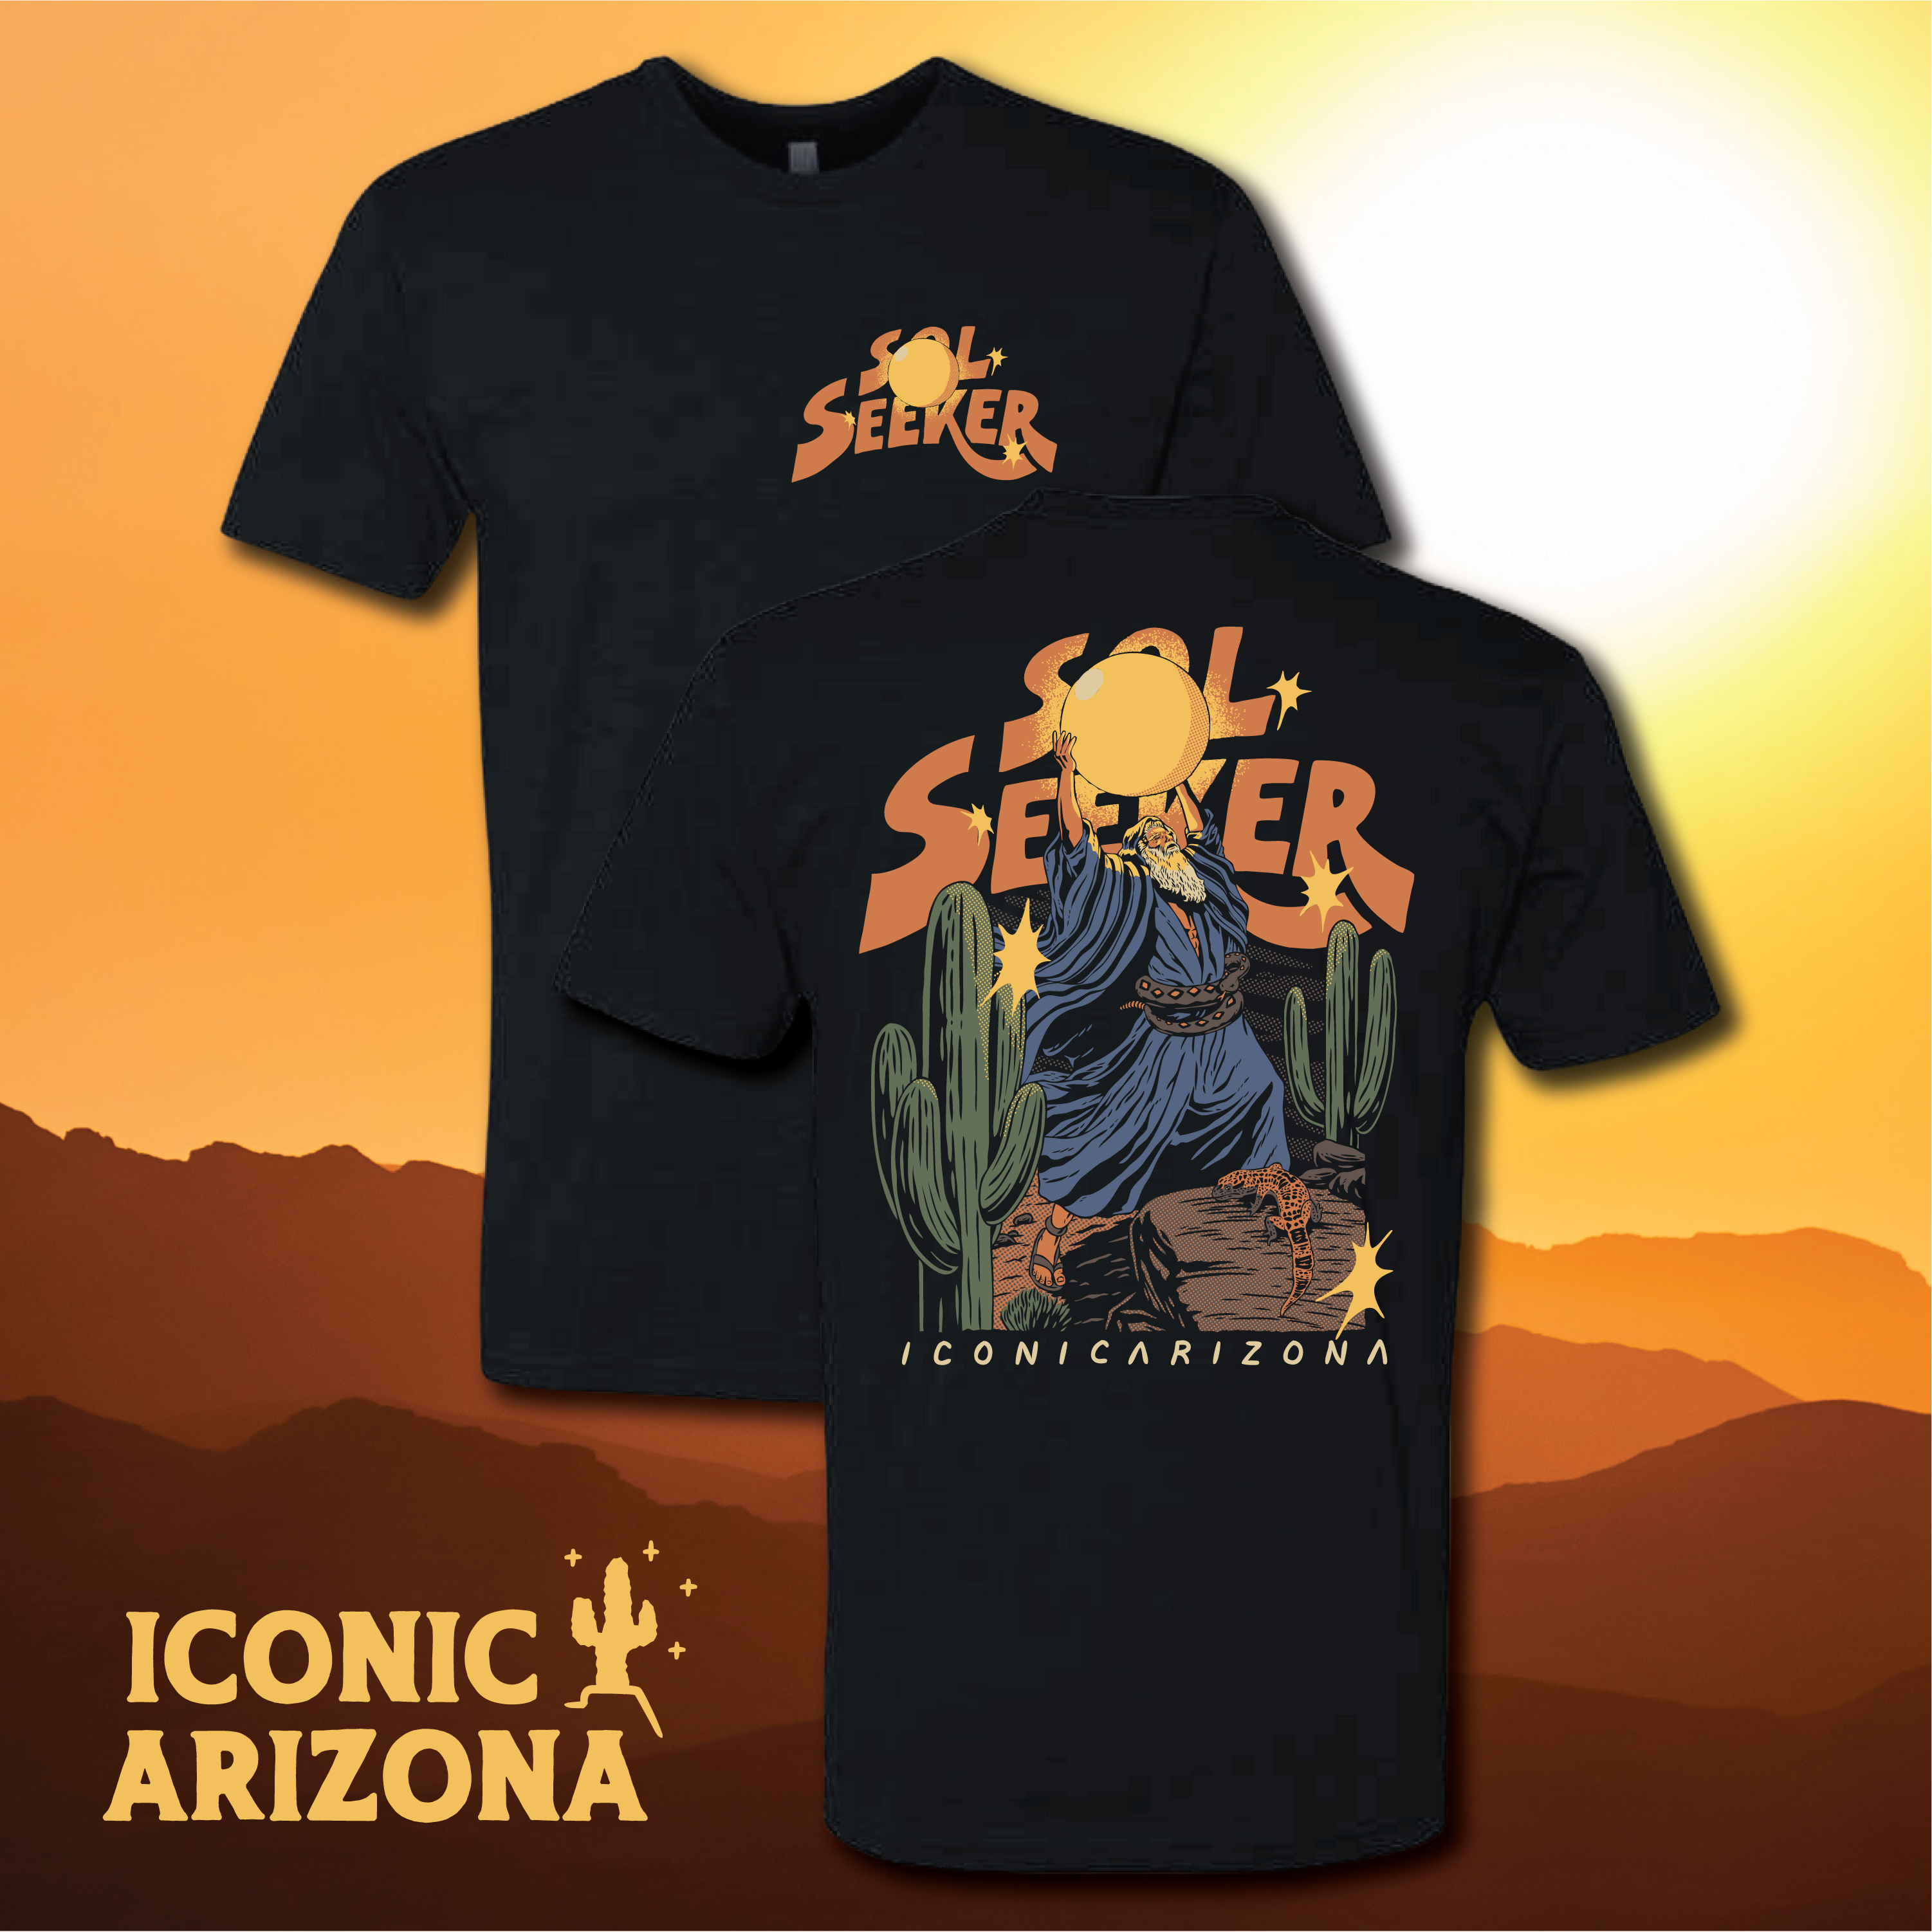 Iconic Arizona Sol Seeker Tee